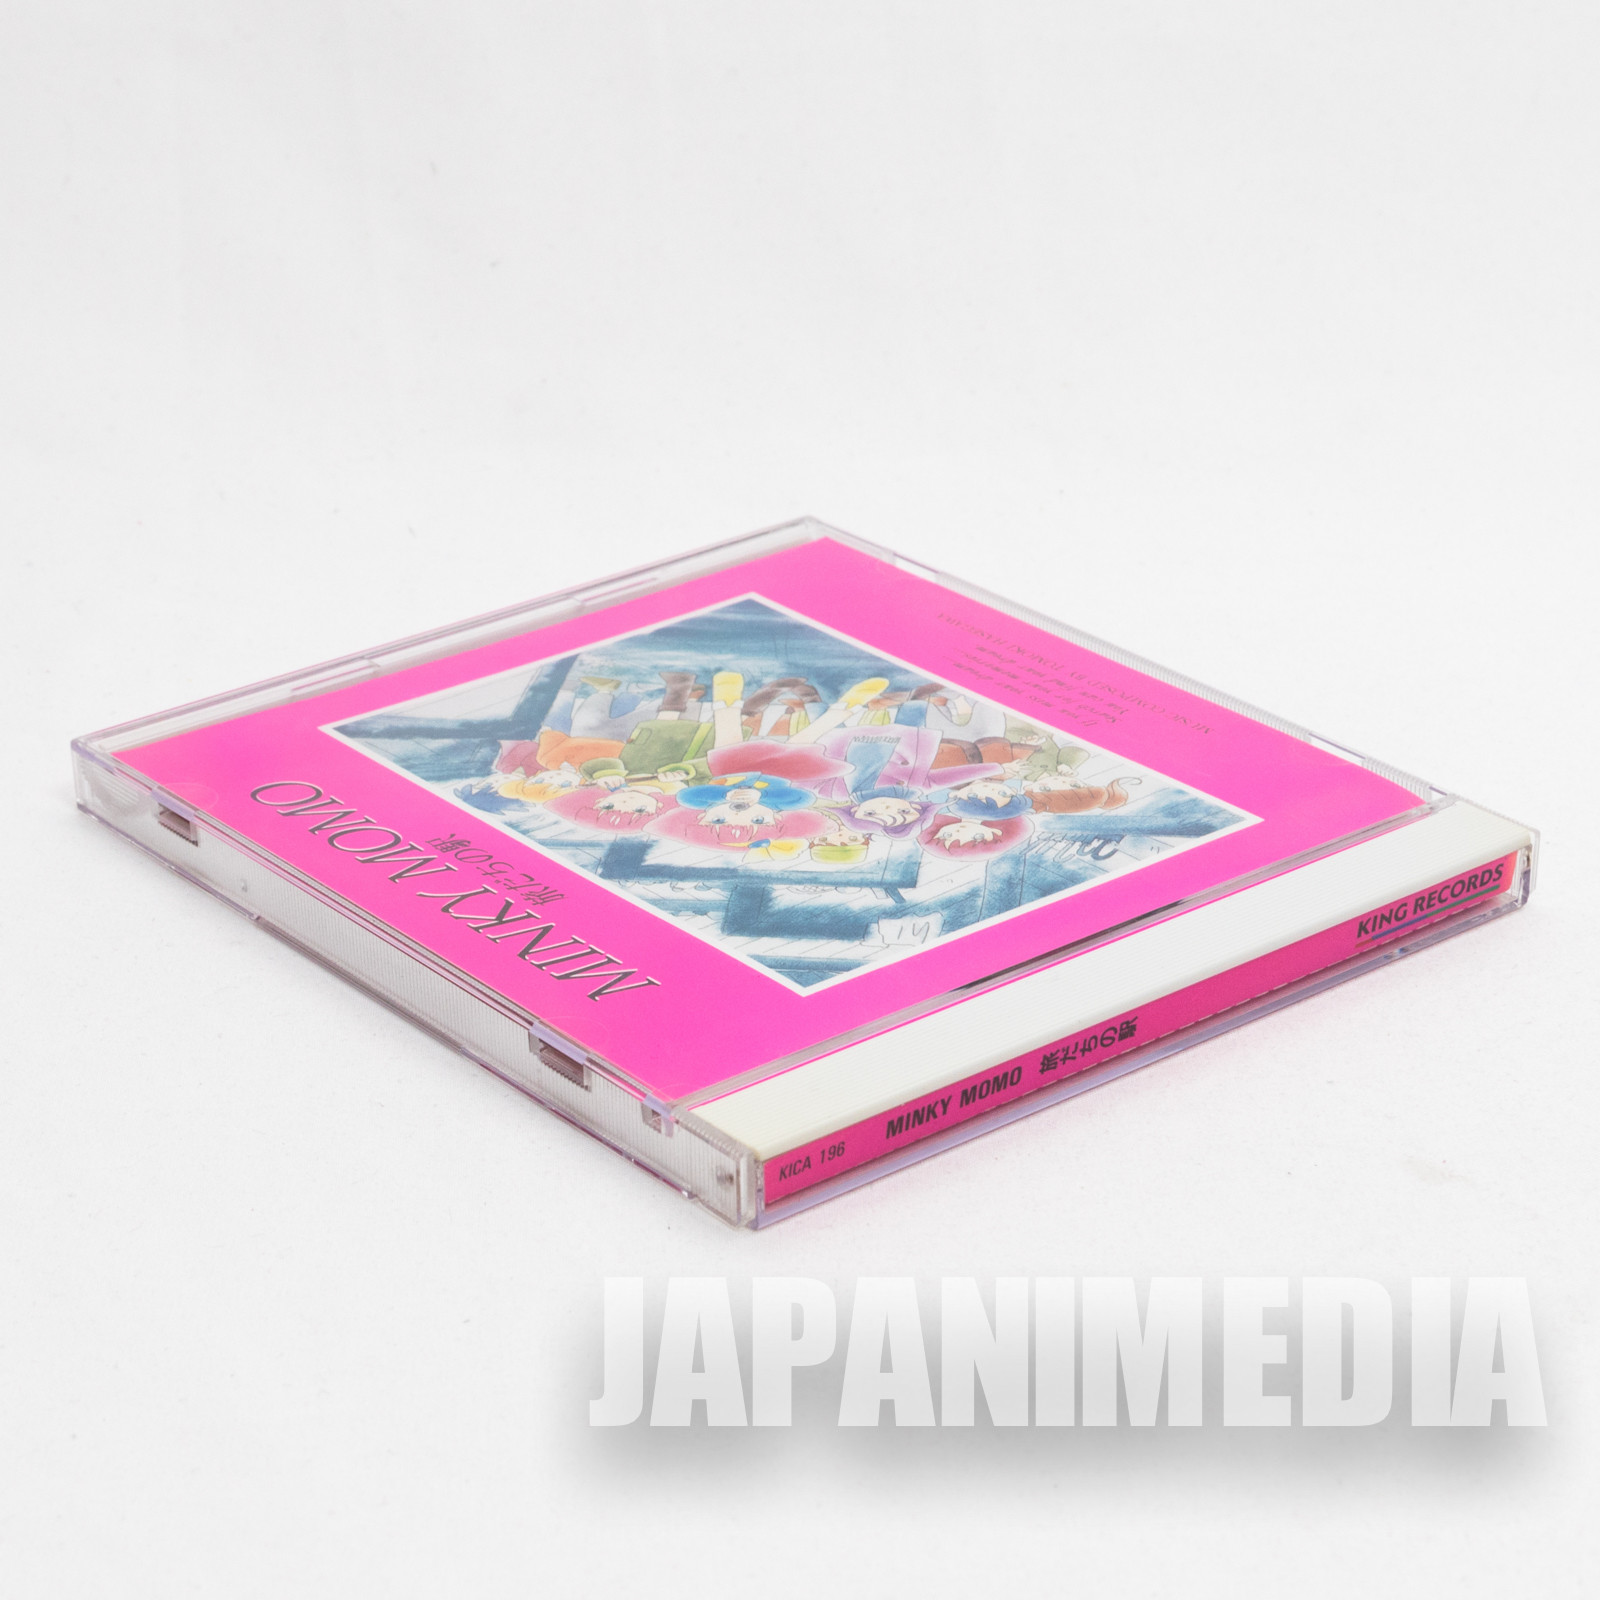 Magical Princess Minky Momo Tabidachi no Eki Sound Track CD KICA-196